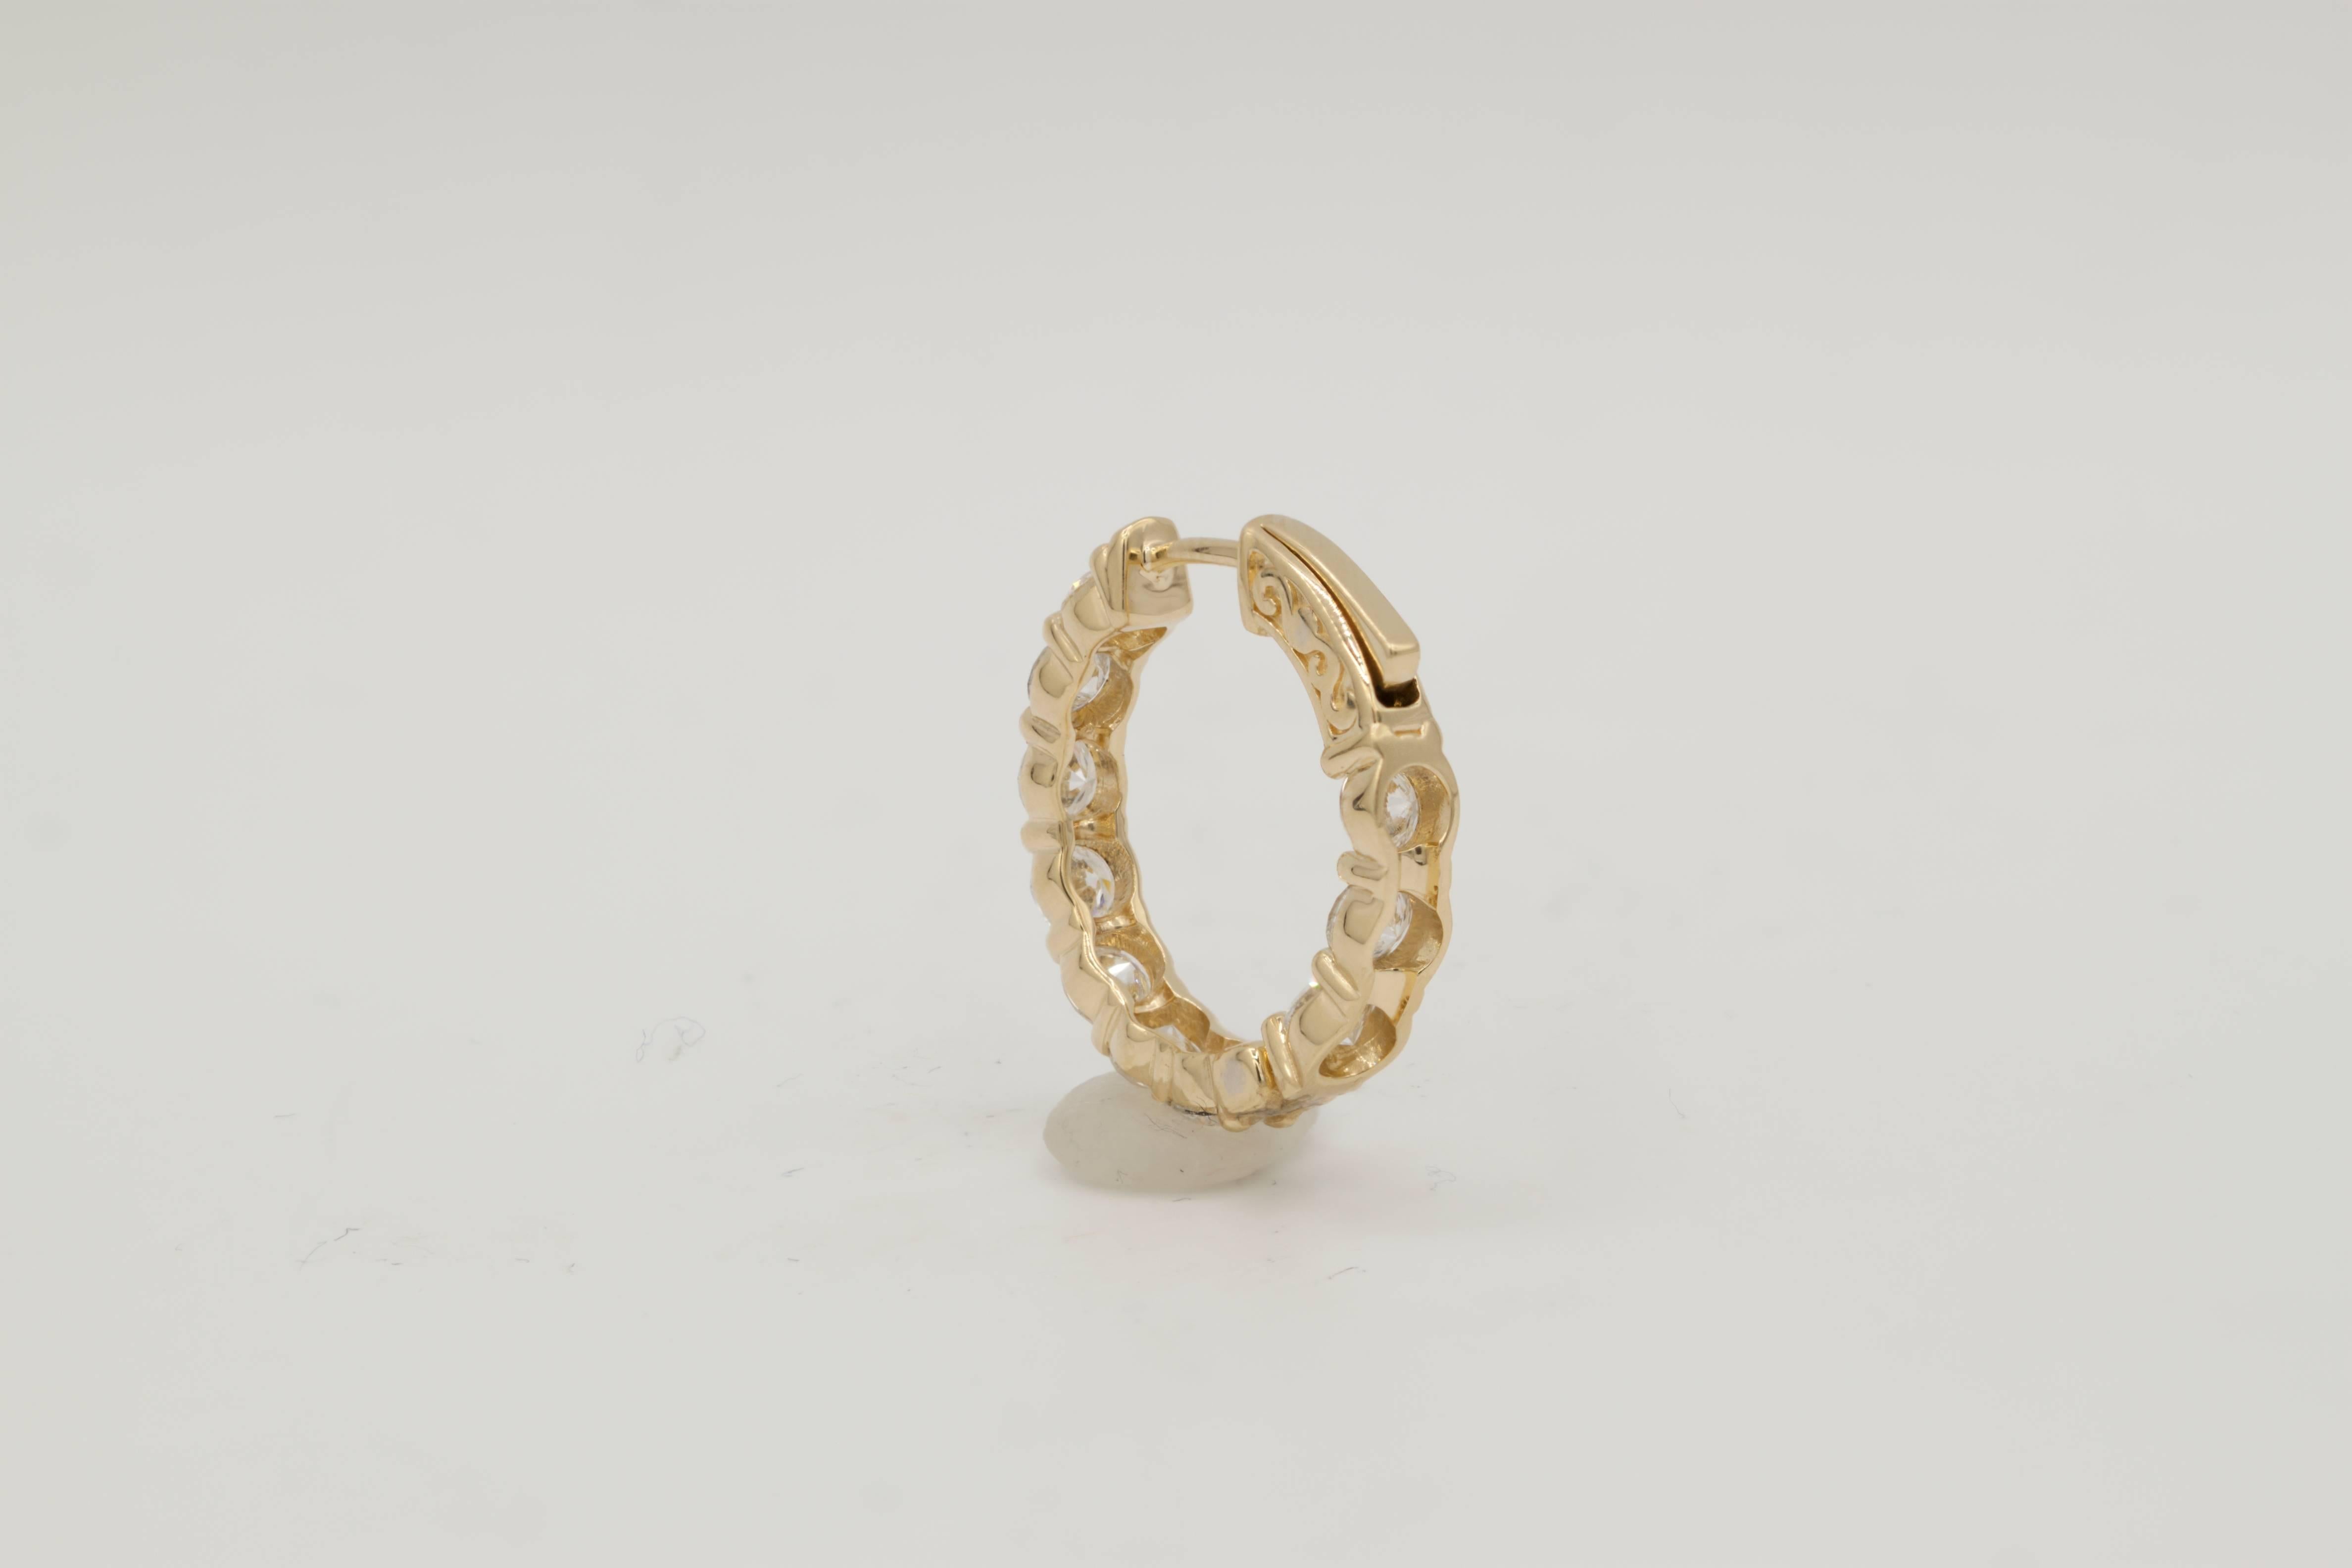 One 18K Yellow Gold diamond Hoop earrings features:
- 4.30 Carats of Round cut Diamonds. 
- 20 Round Cut Diamonds
- Each stone 0.20 Carats
- Oval Shaped
- 1